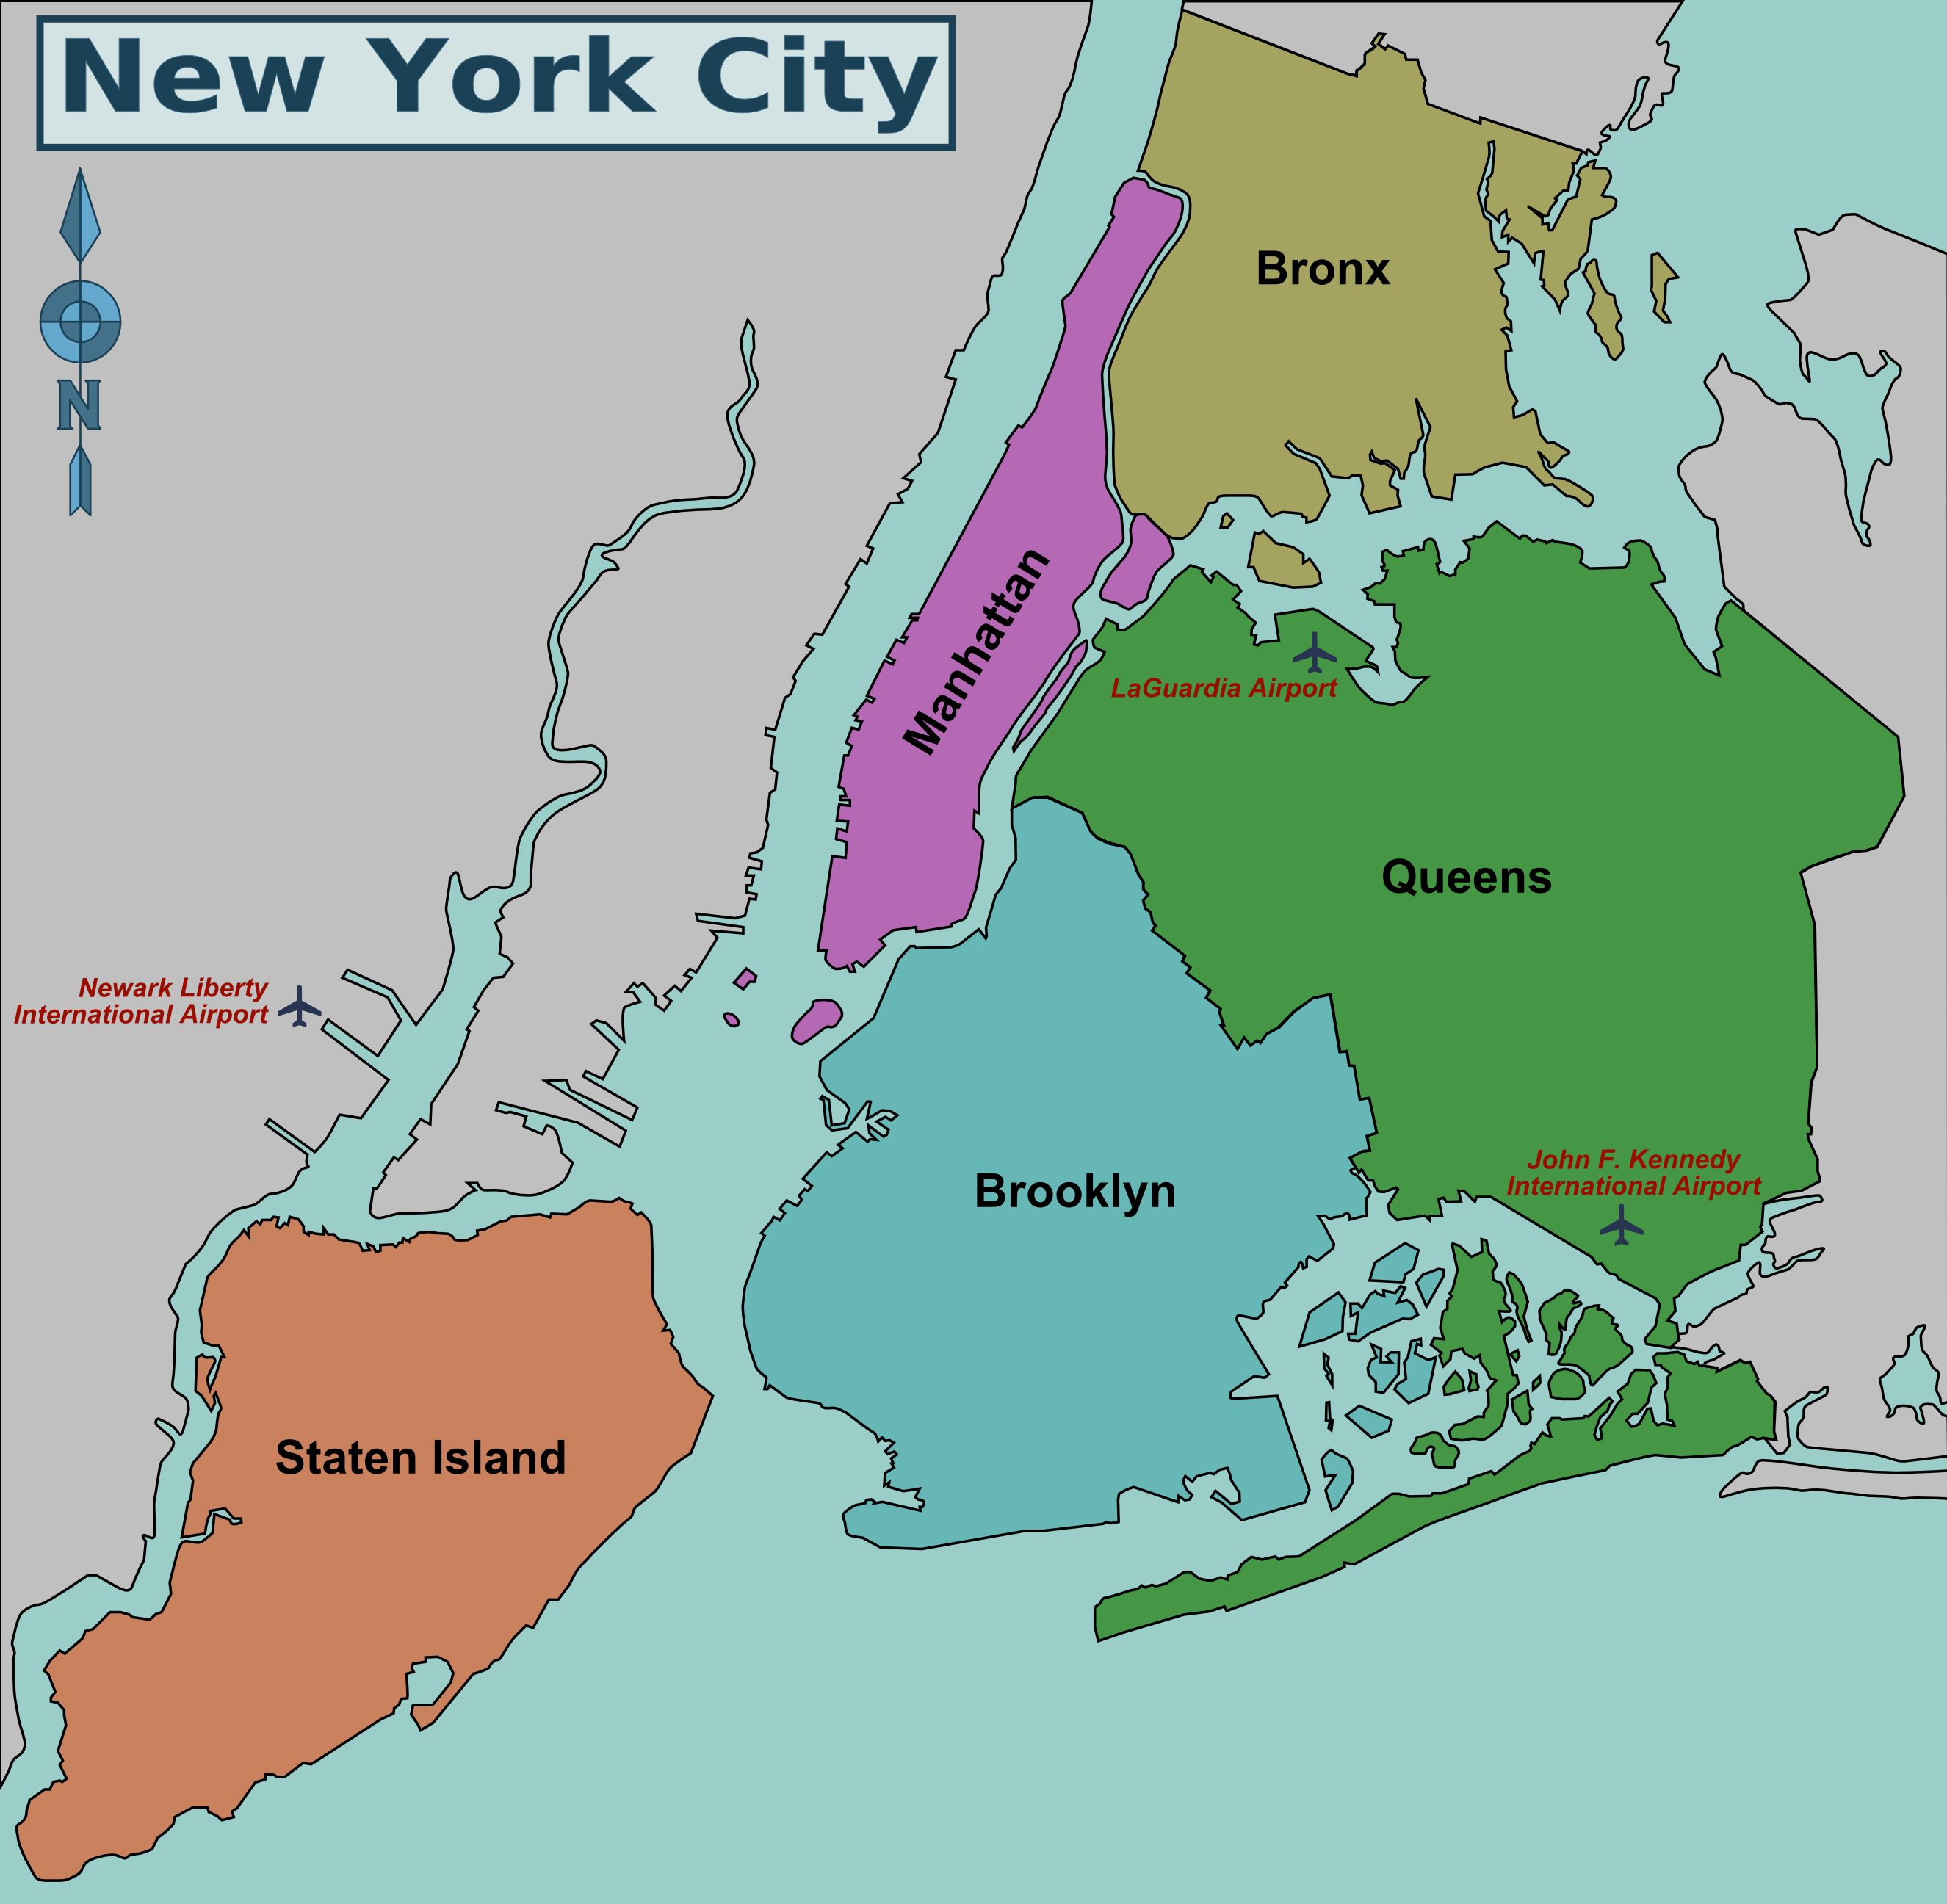 http://nycmap360.com/carte/image/en/nyc-borough-map.png